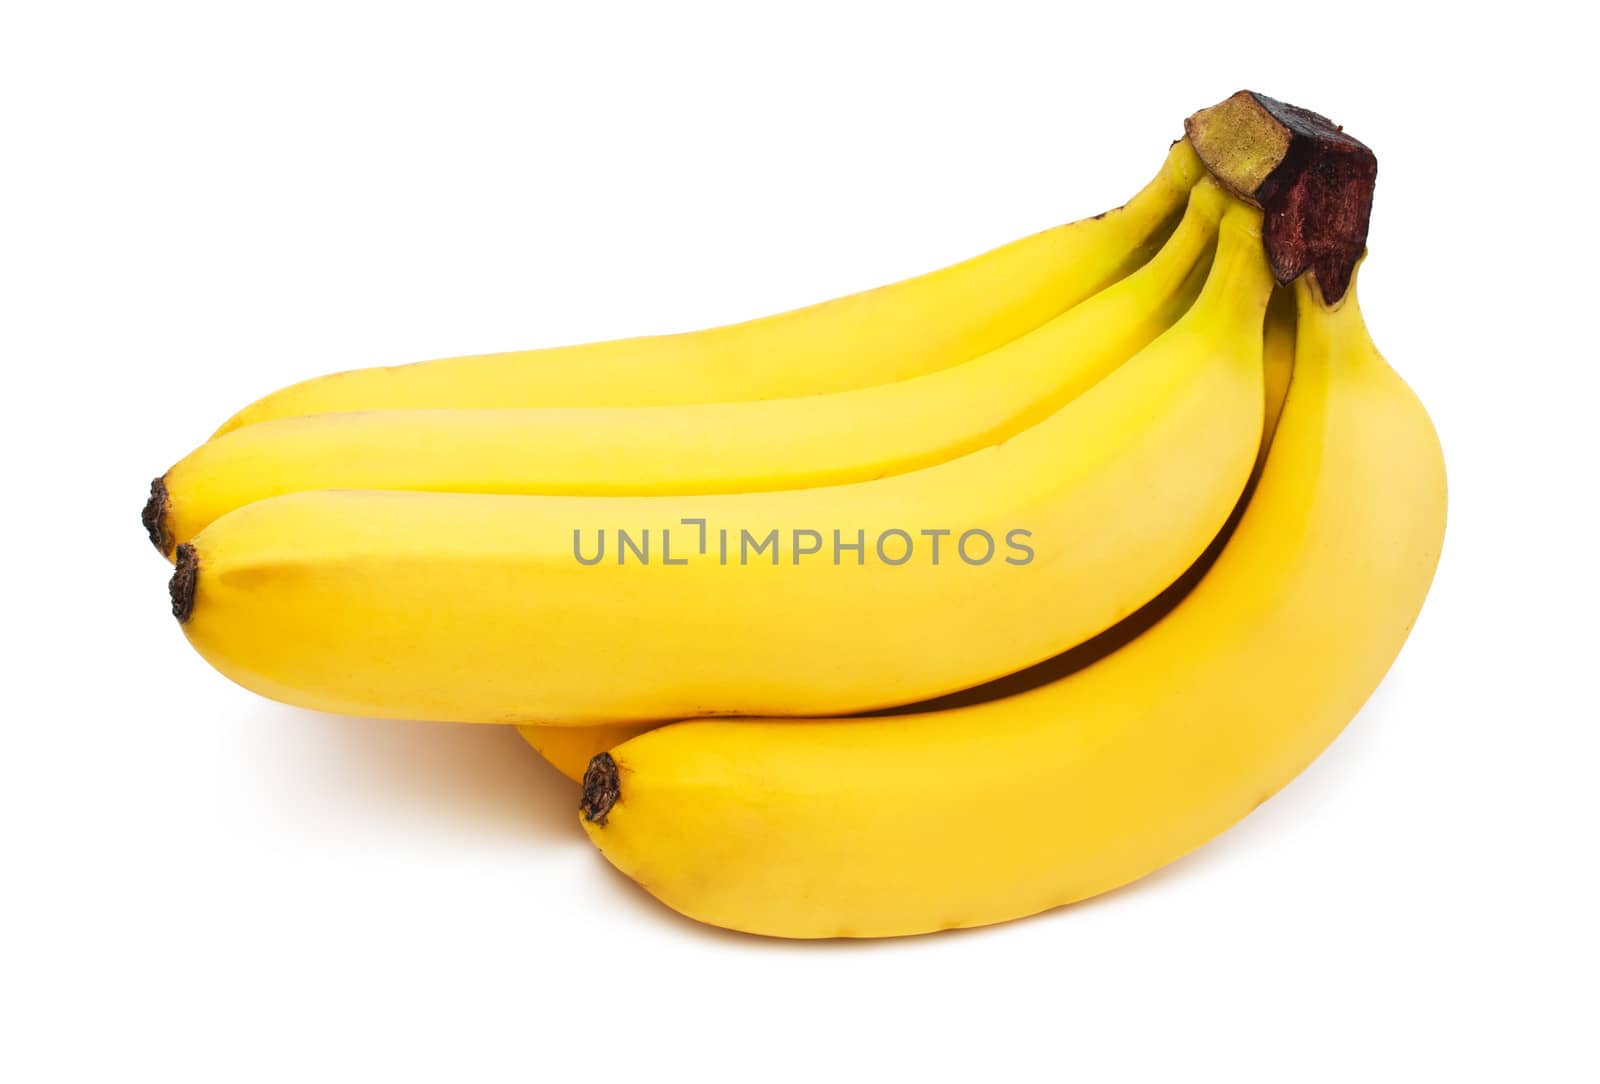 Fresh yellow banana isolated on white background